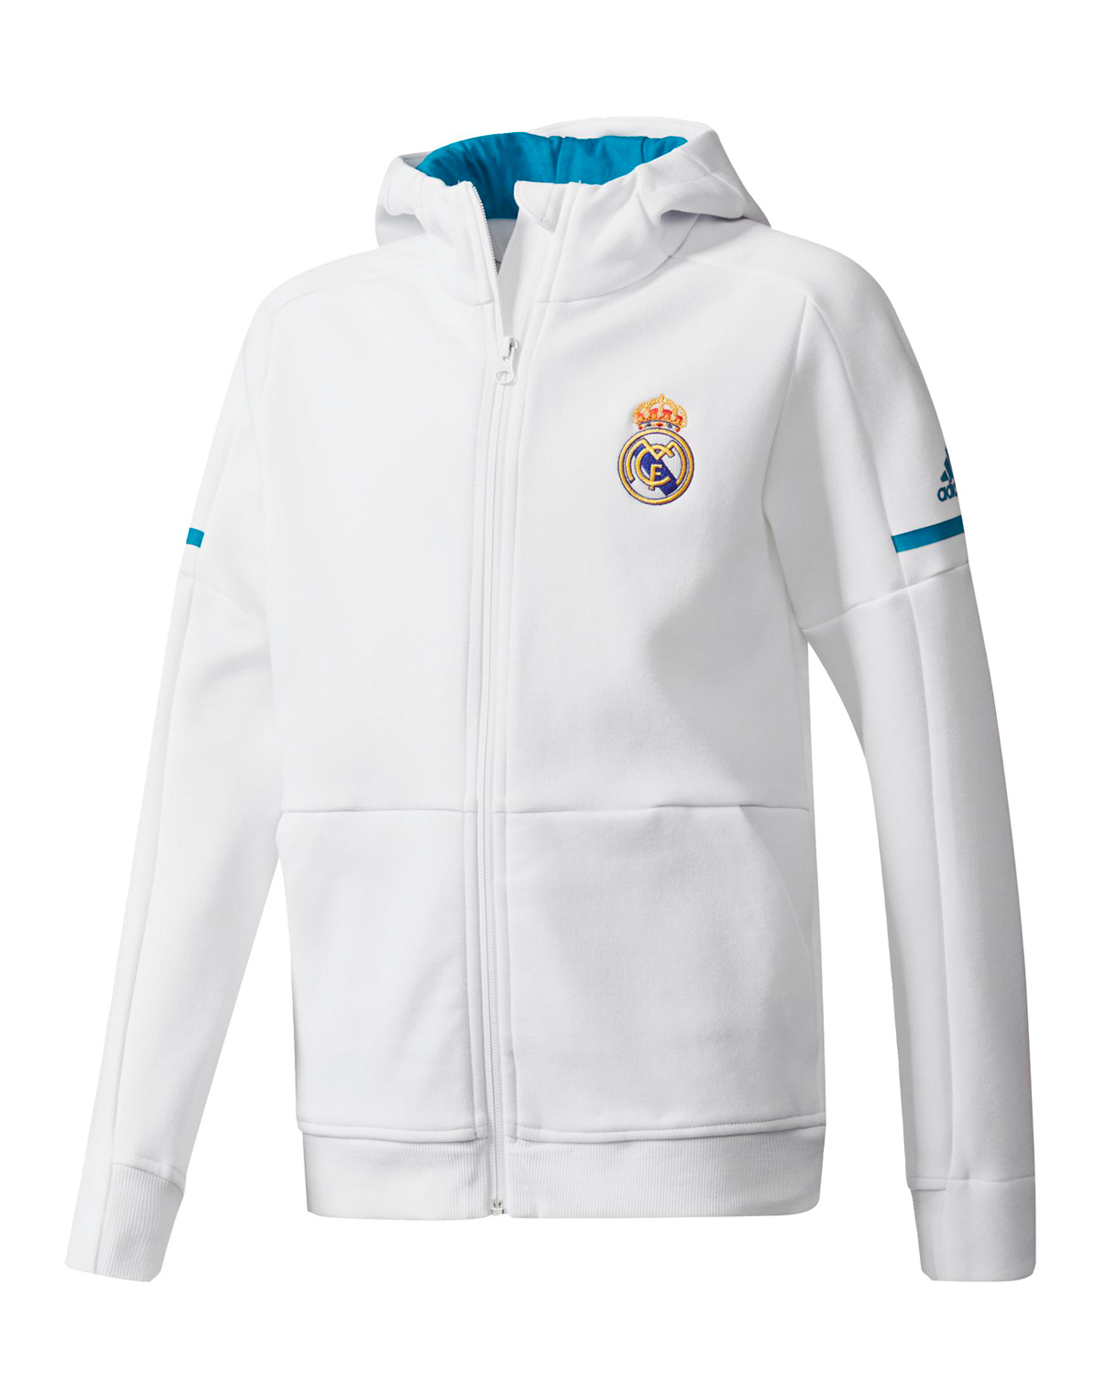 Адидас реал. Adidas real Madrid кофта. Кофта Реал Мадрид 2017. Adidas real Madrid White Jacket. Кофта adidas real Madrid 2006.